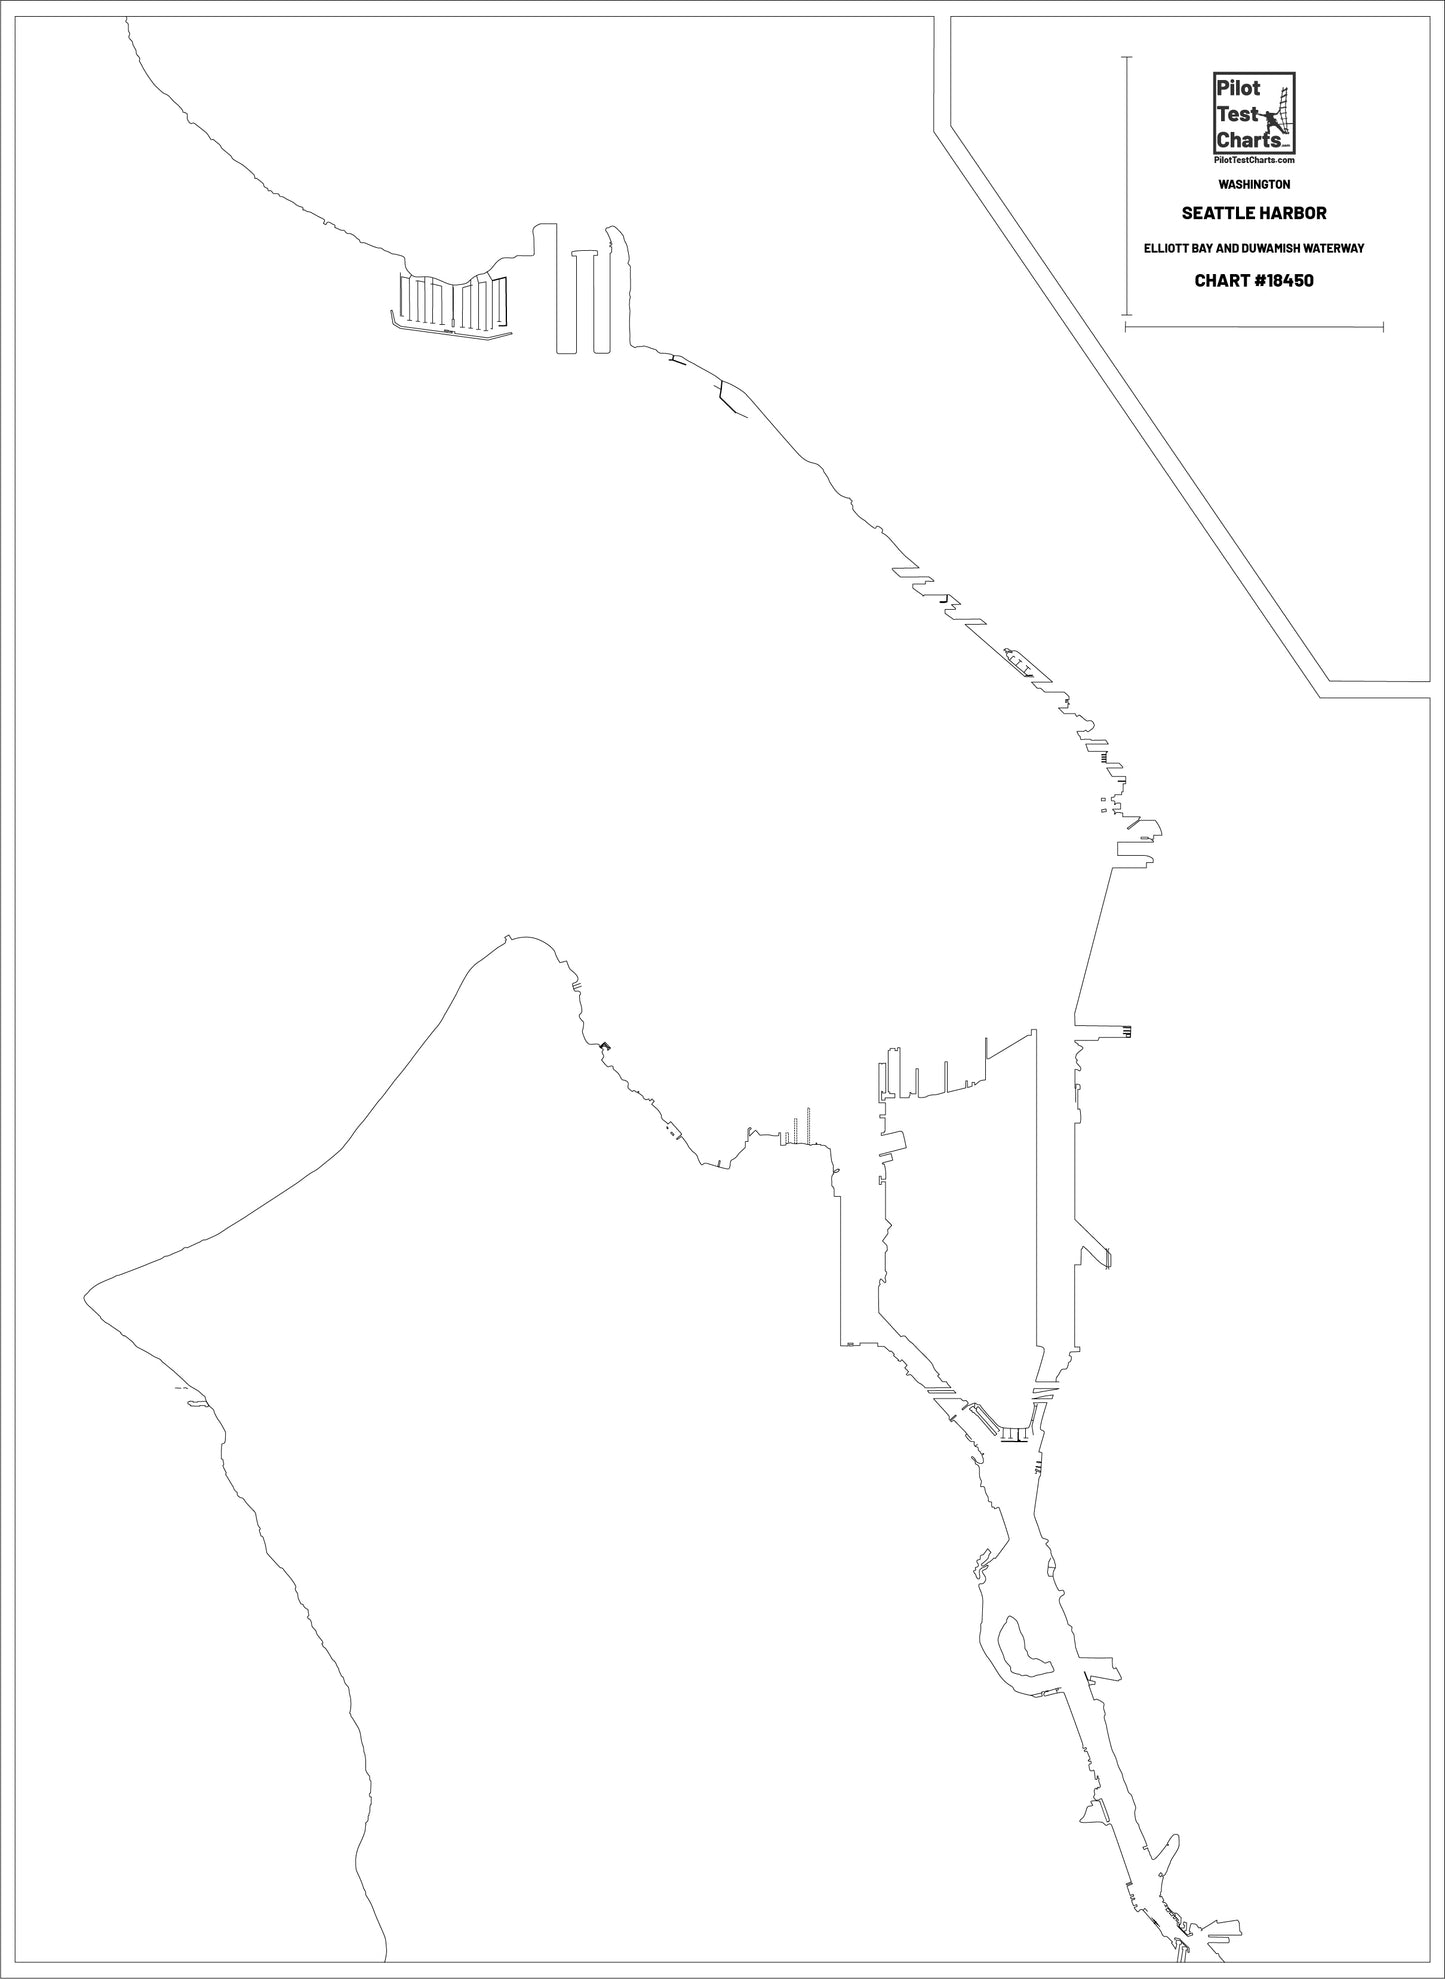 #18450 Seattle Harbor, Elliot Bay and Duwamish Waterway Chart